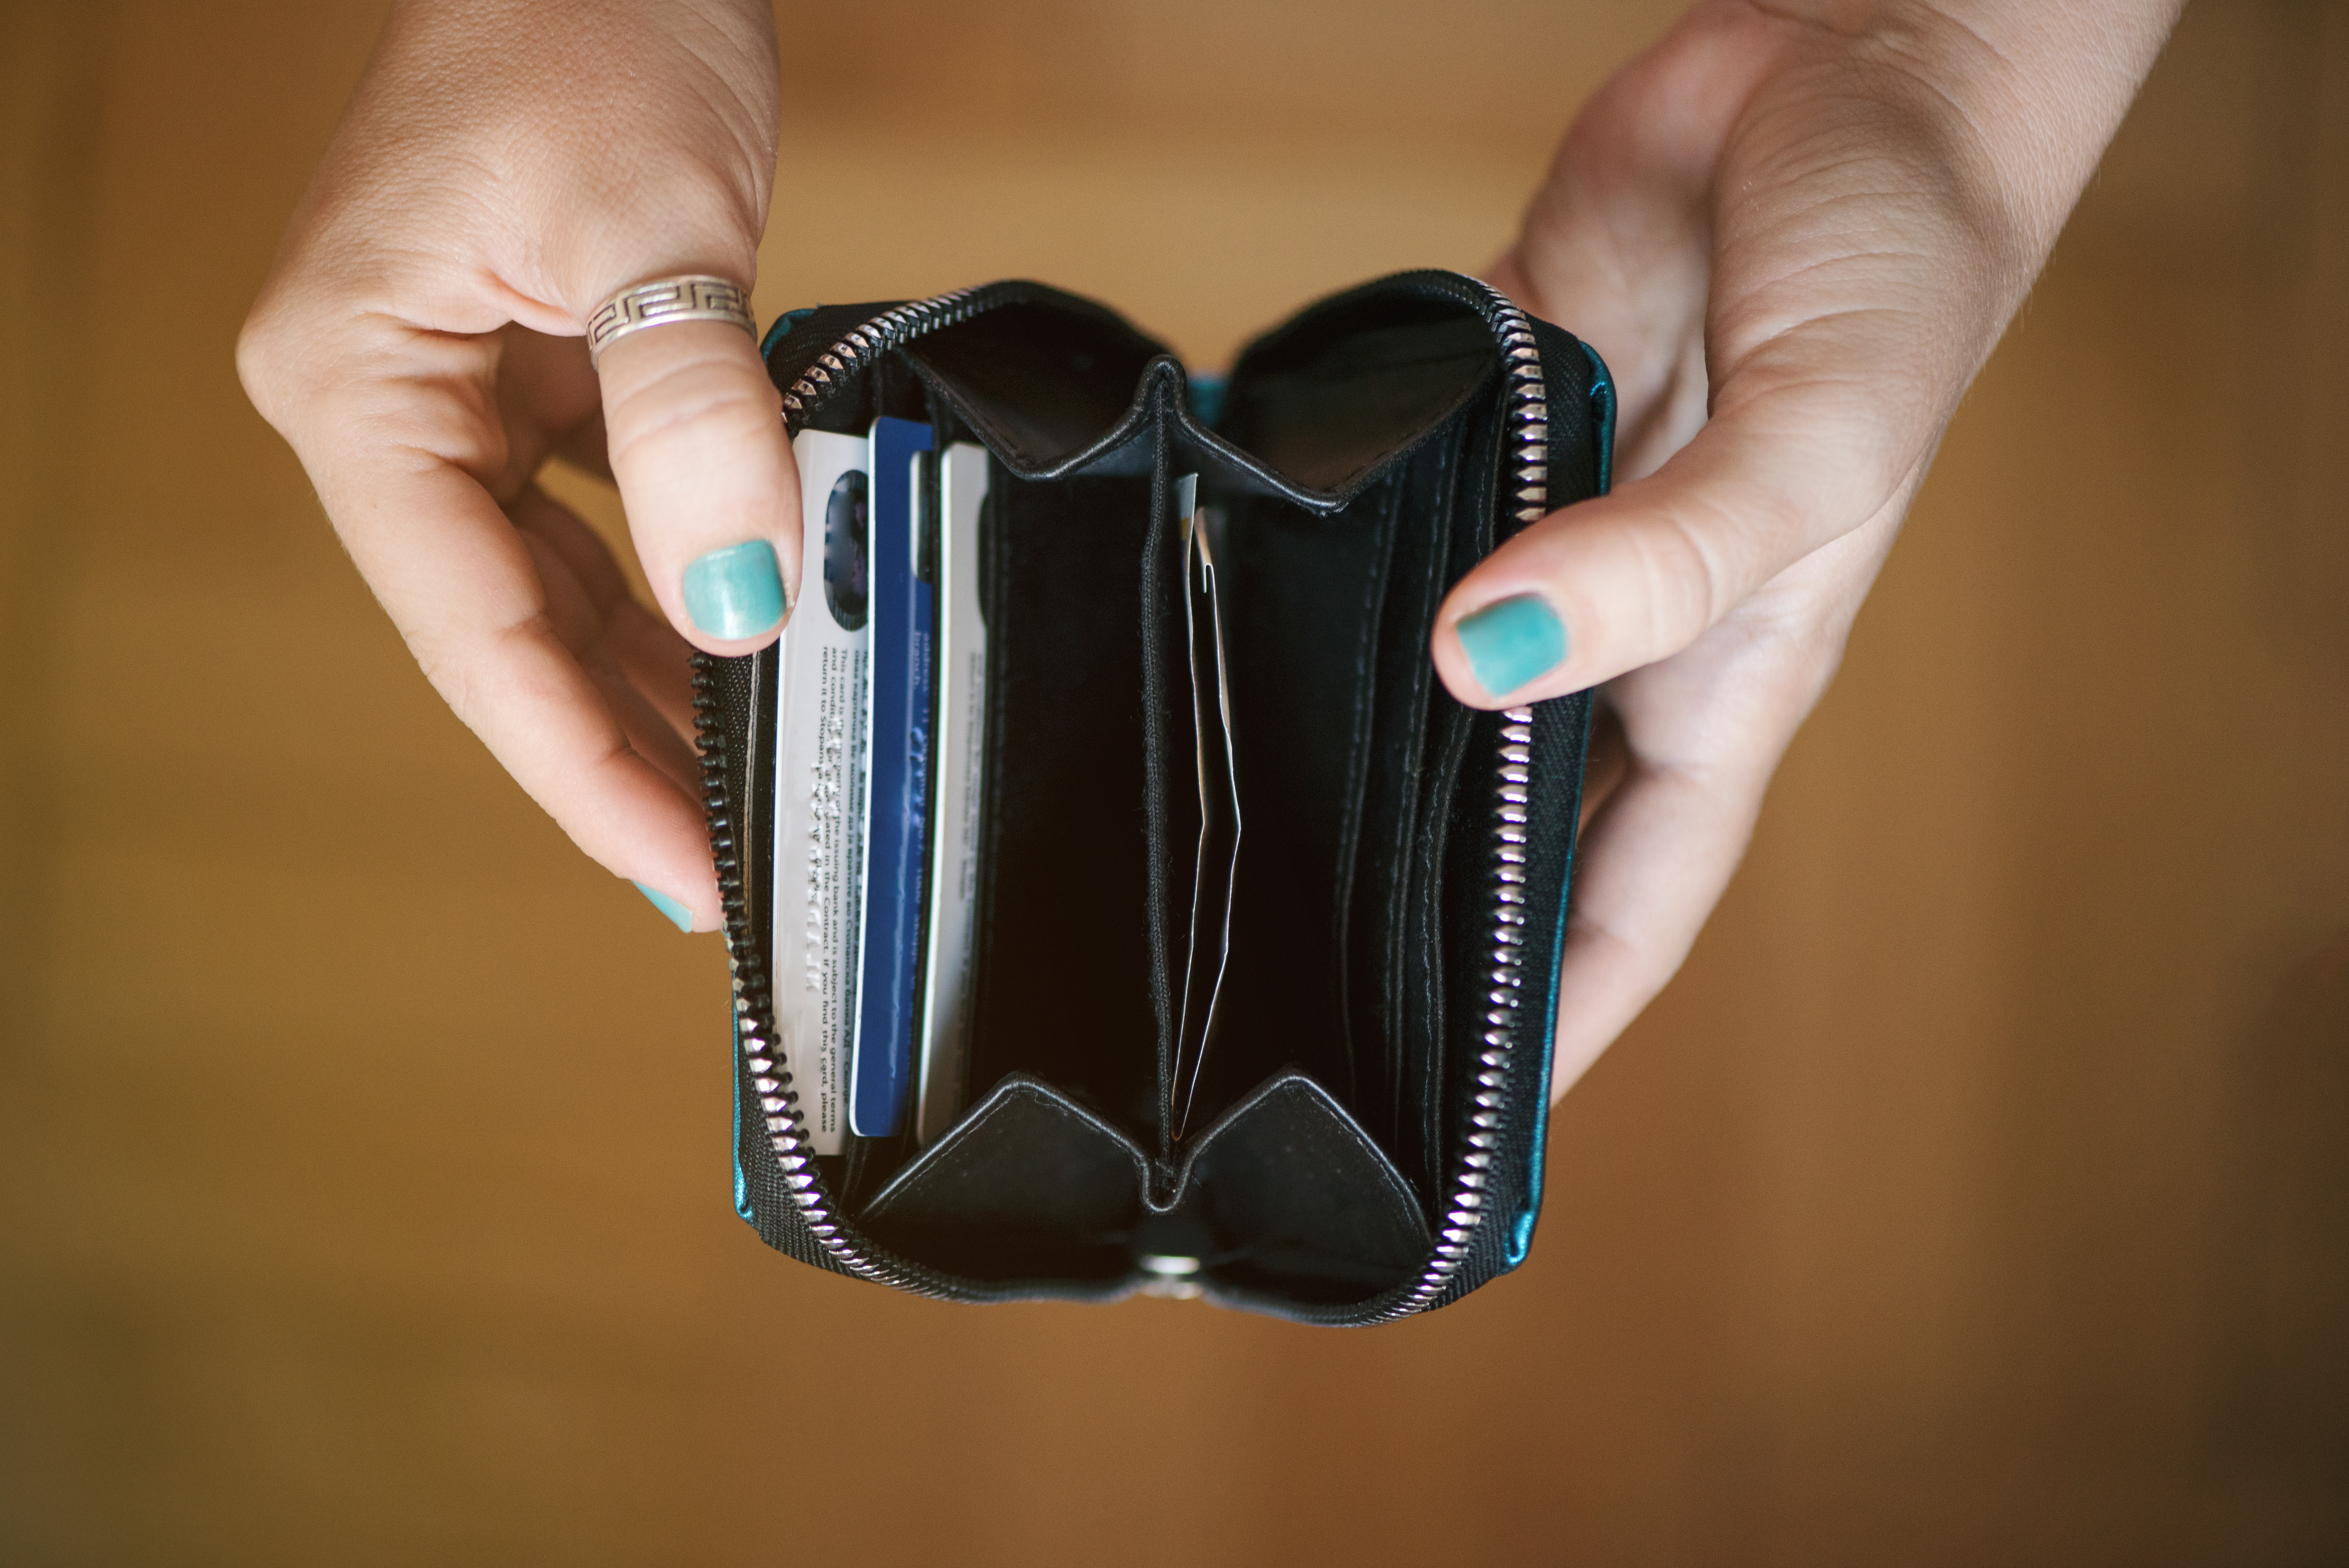 A woman holding an empty wallet | Source: Shutterstock